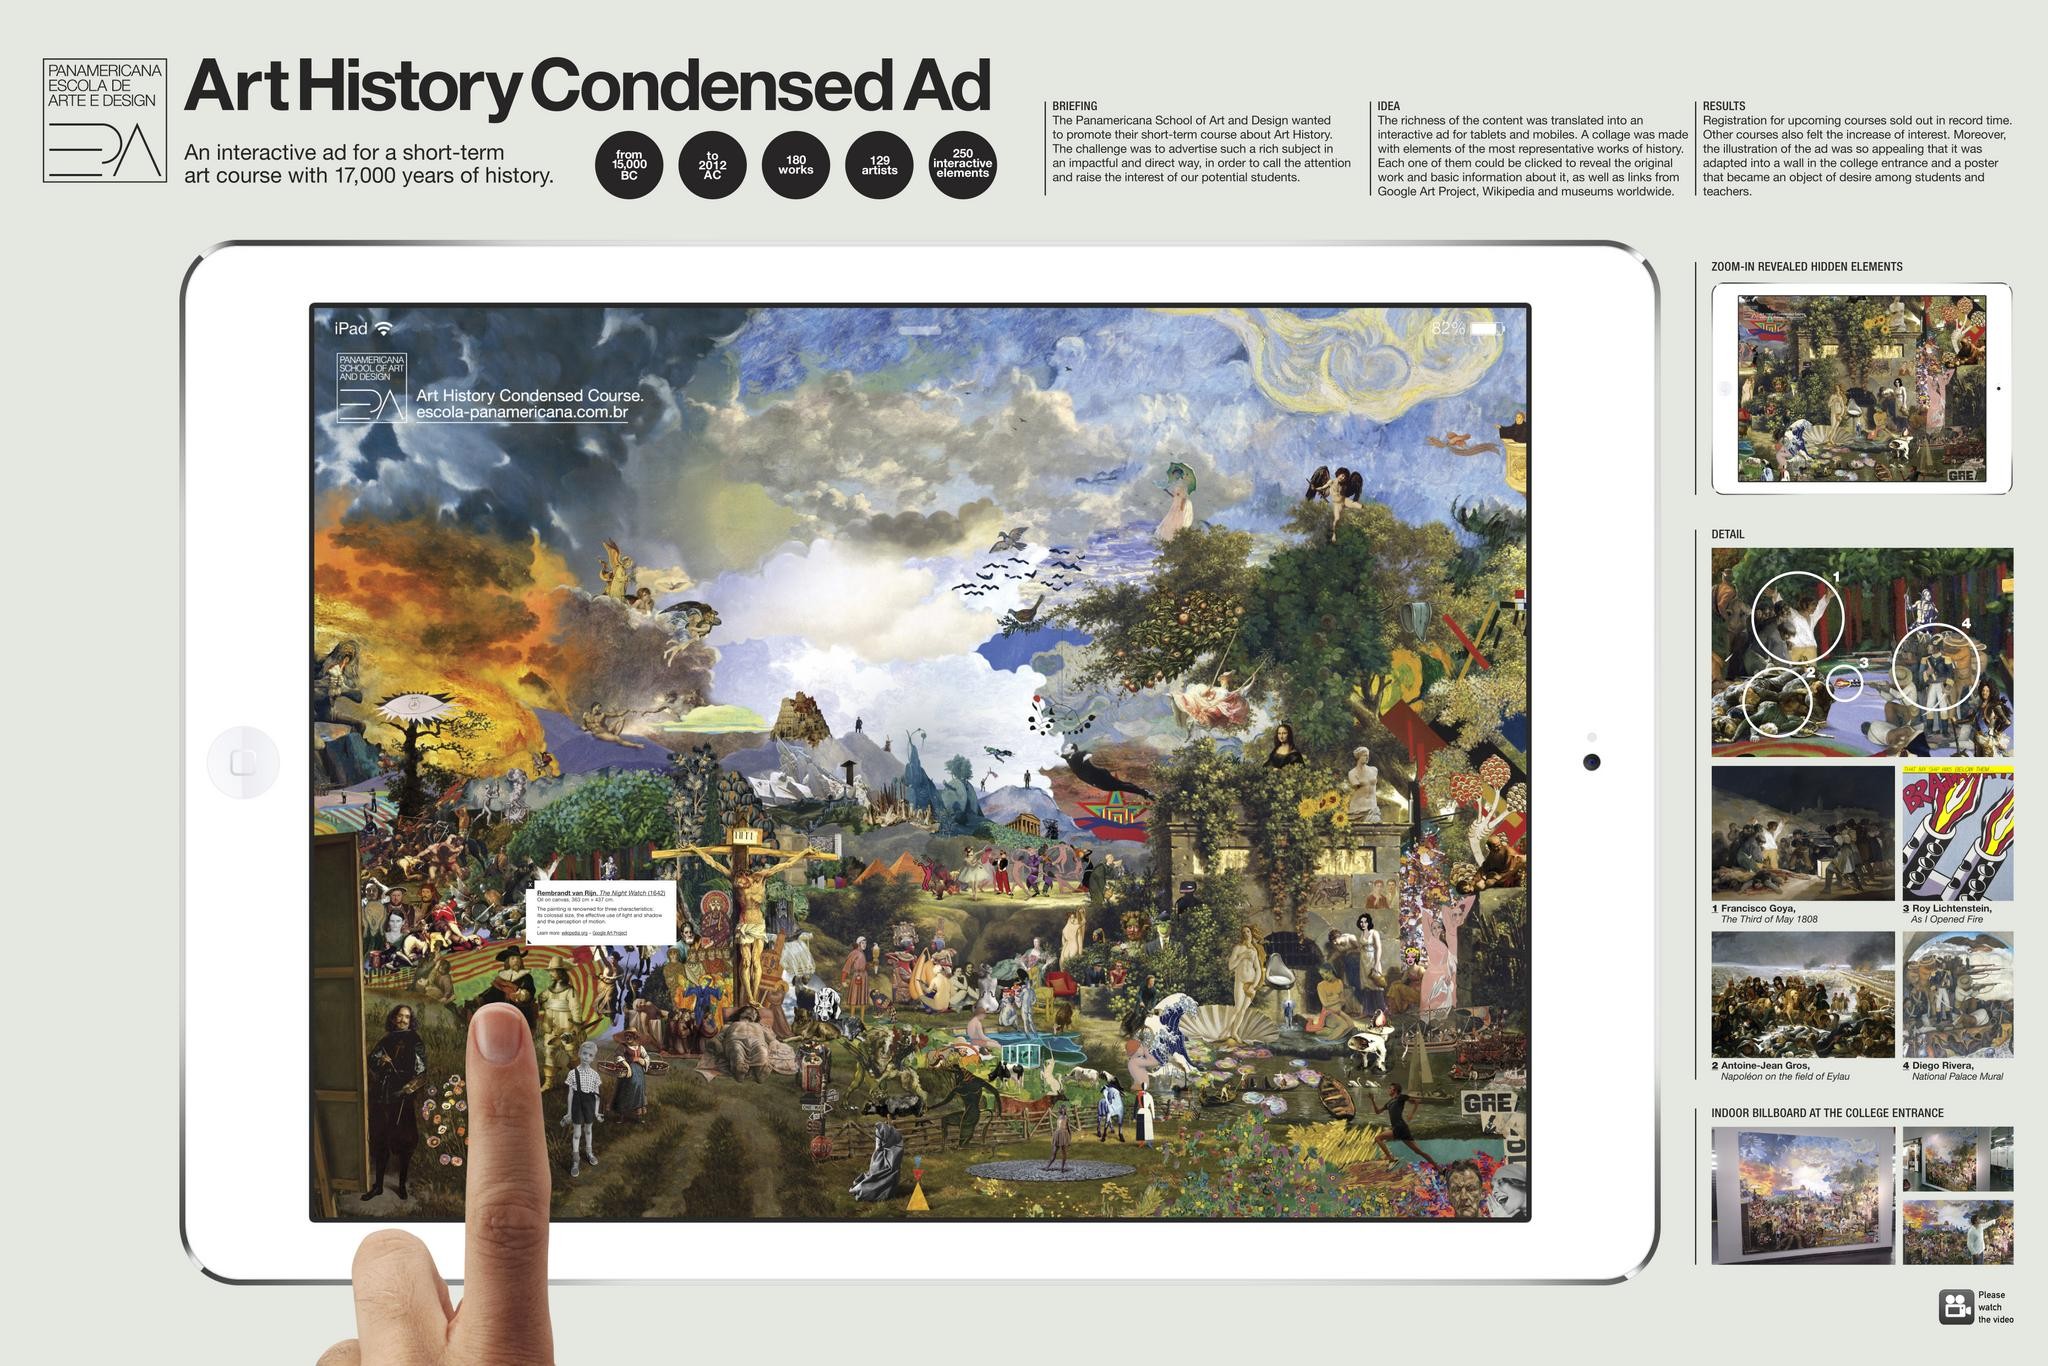 ART HISTORY CONDENSED AD